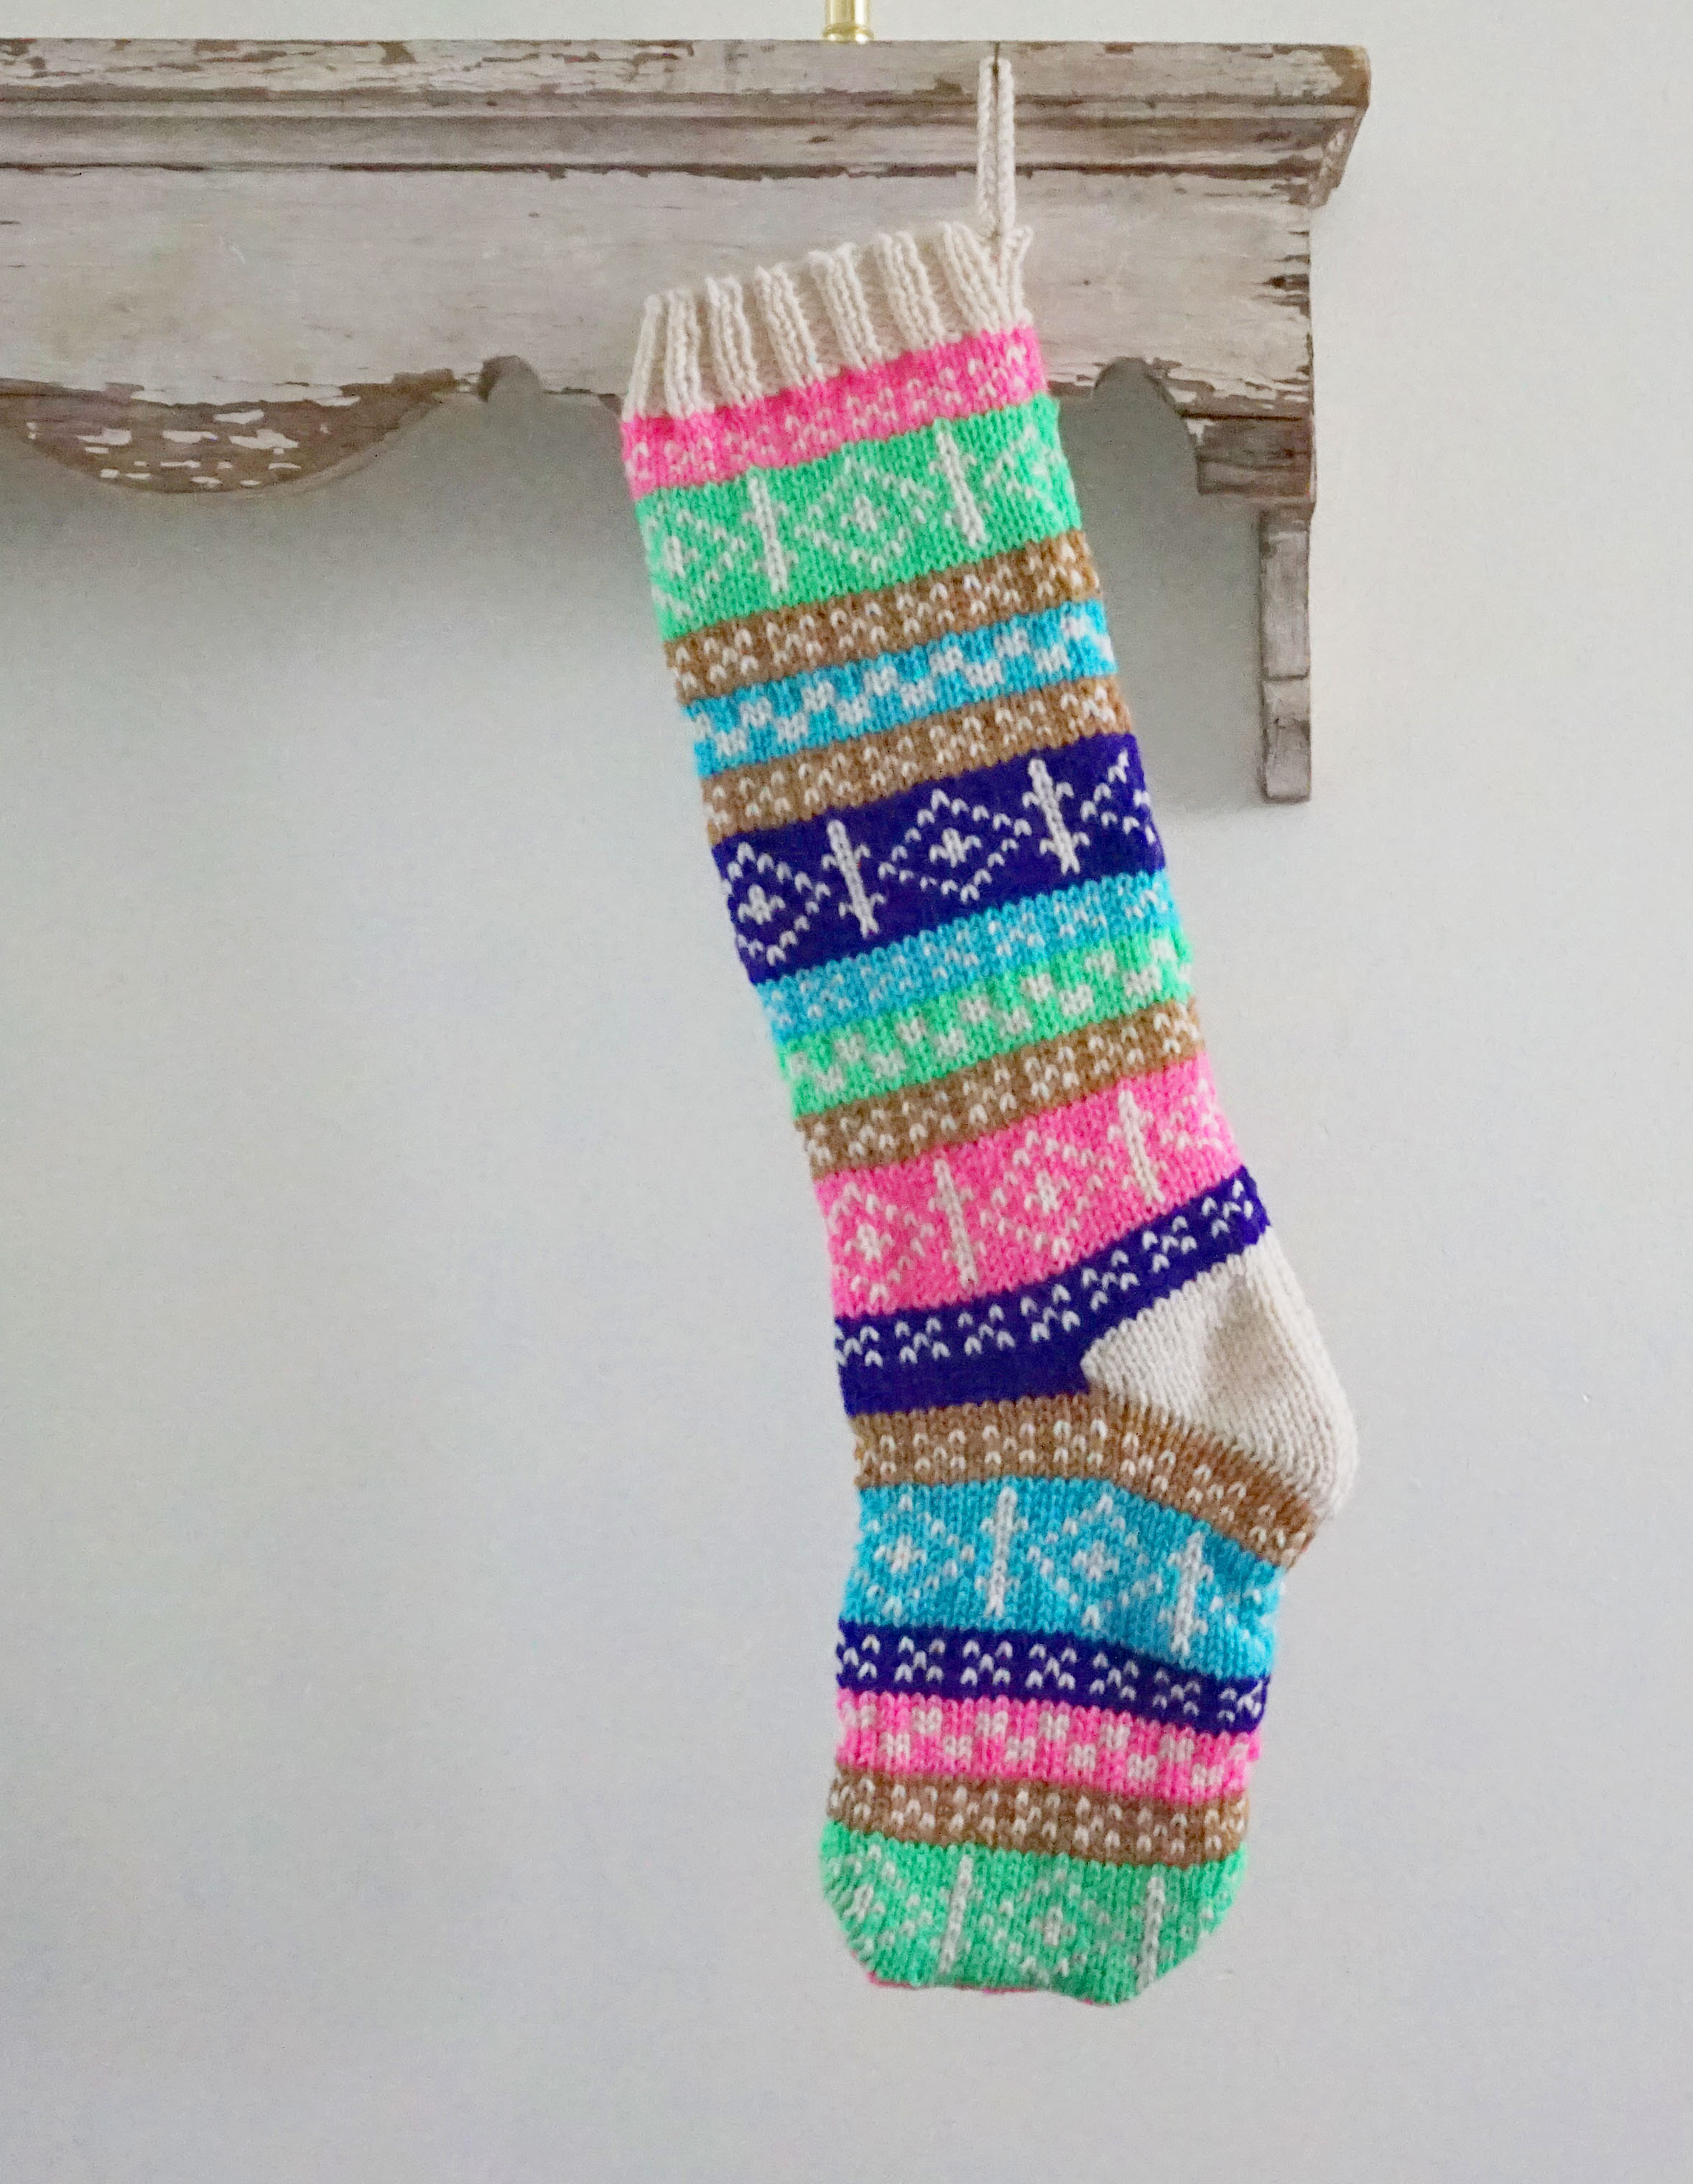 ishknits Holiday Knitting Campaign | ishknits